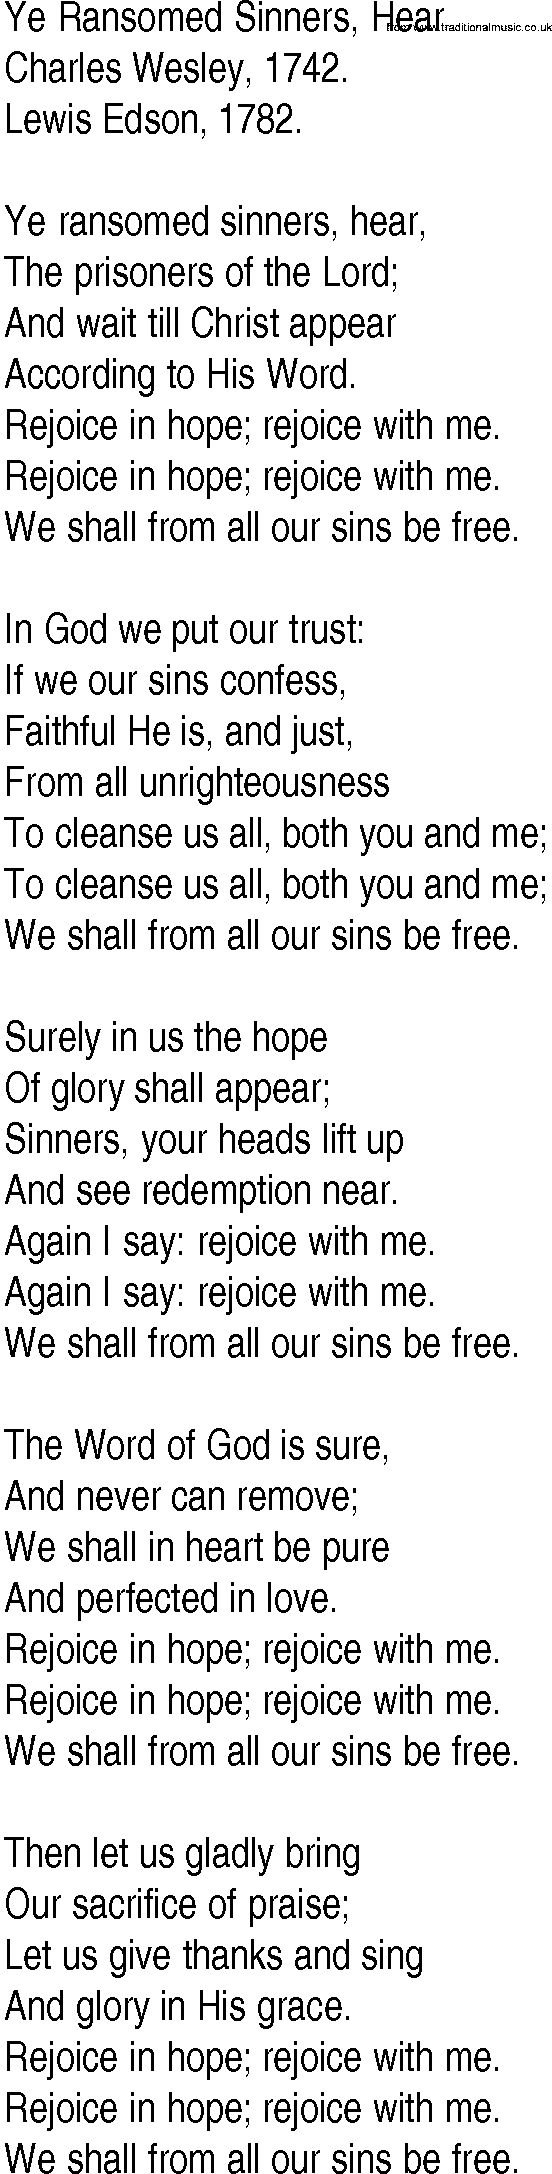 Hymn and Gospel Song: Ye Ransomed Sinners, Hear by Charles Wesley lyrics